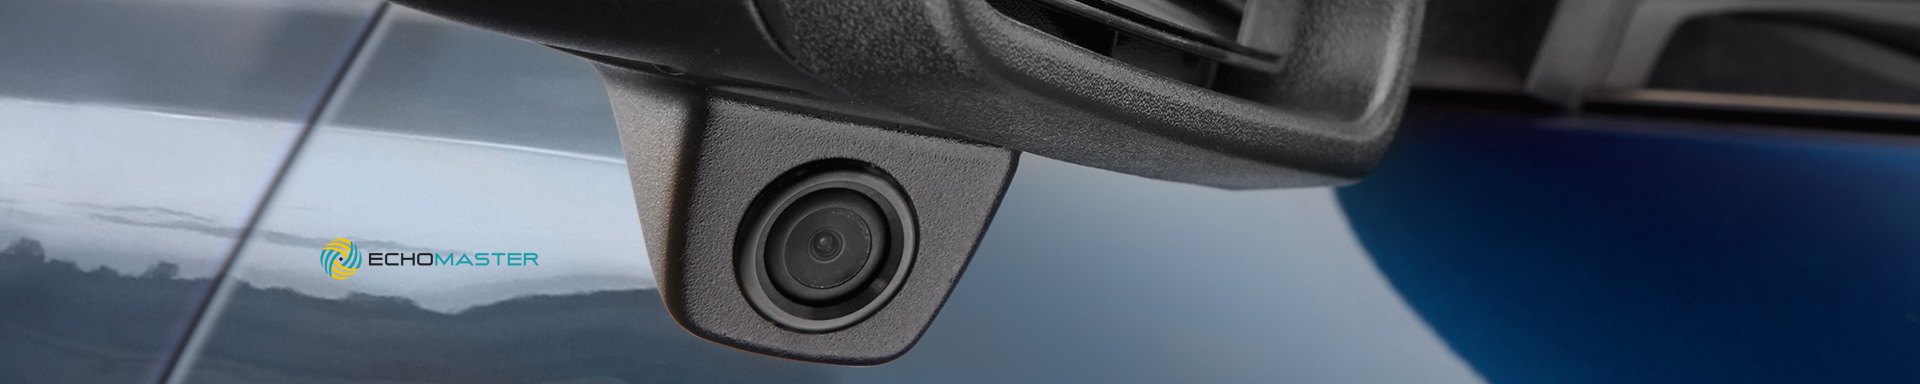 Echomaster Cameras & Driver Safety